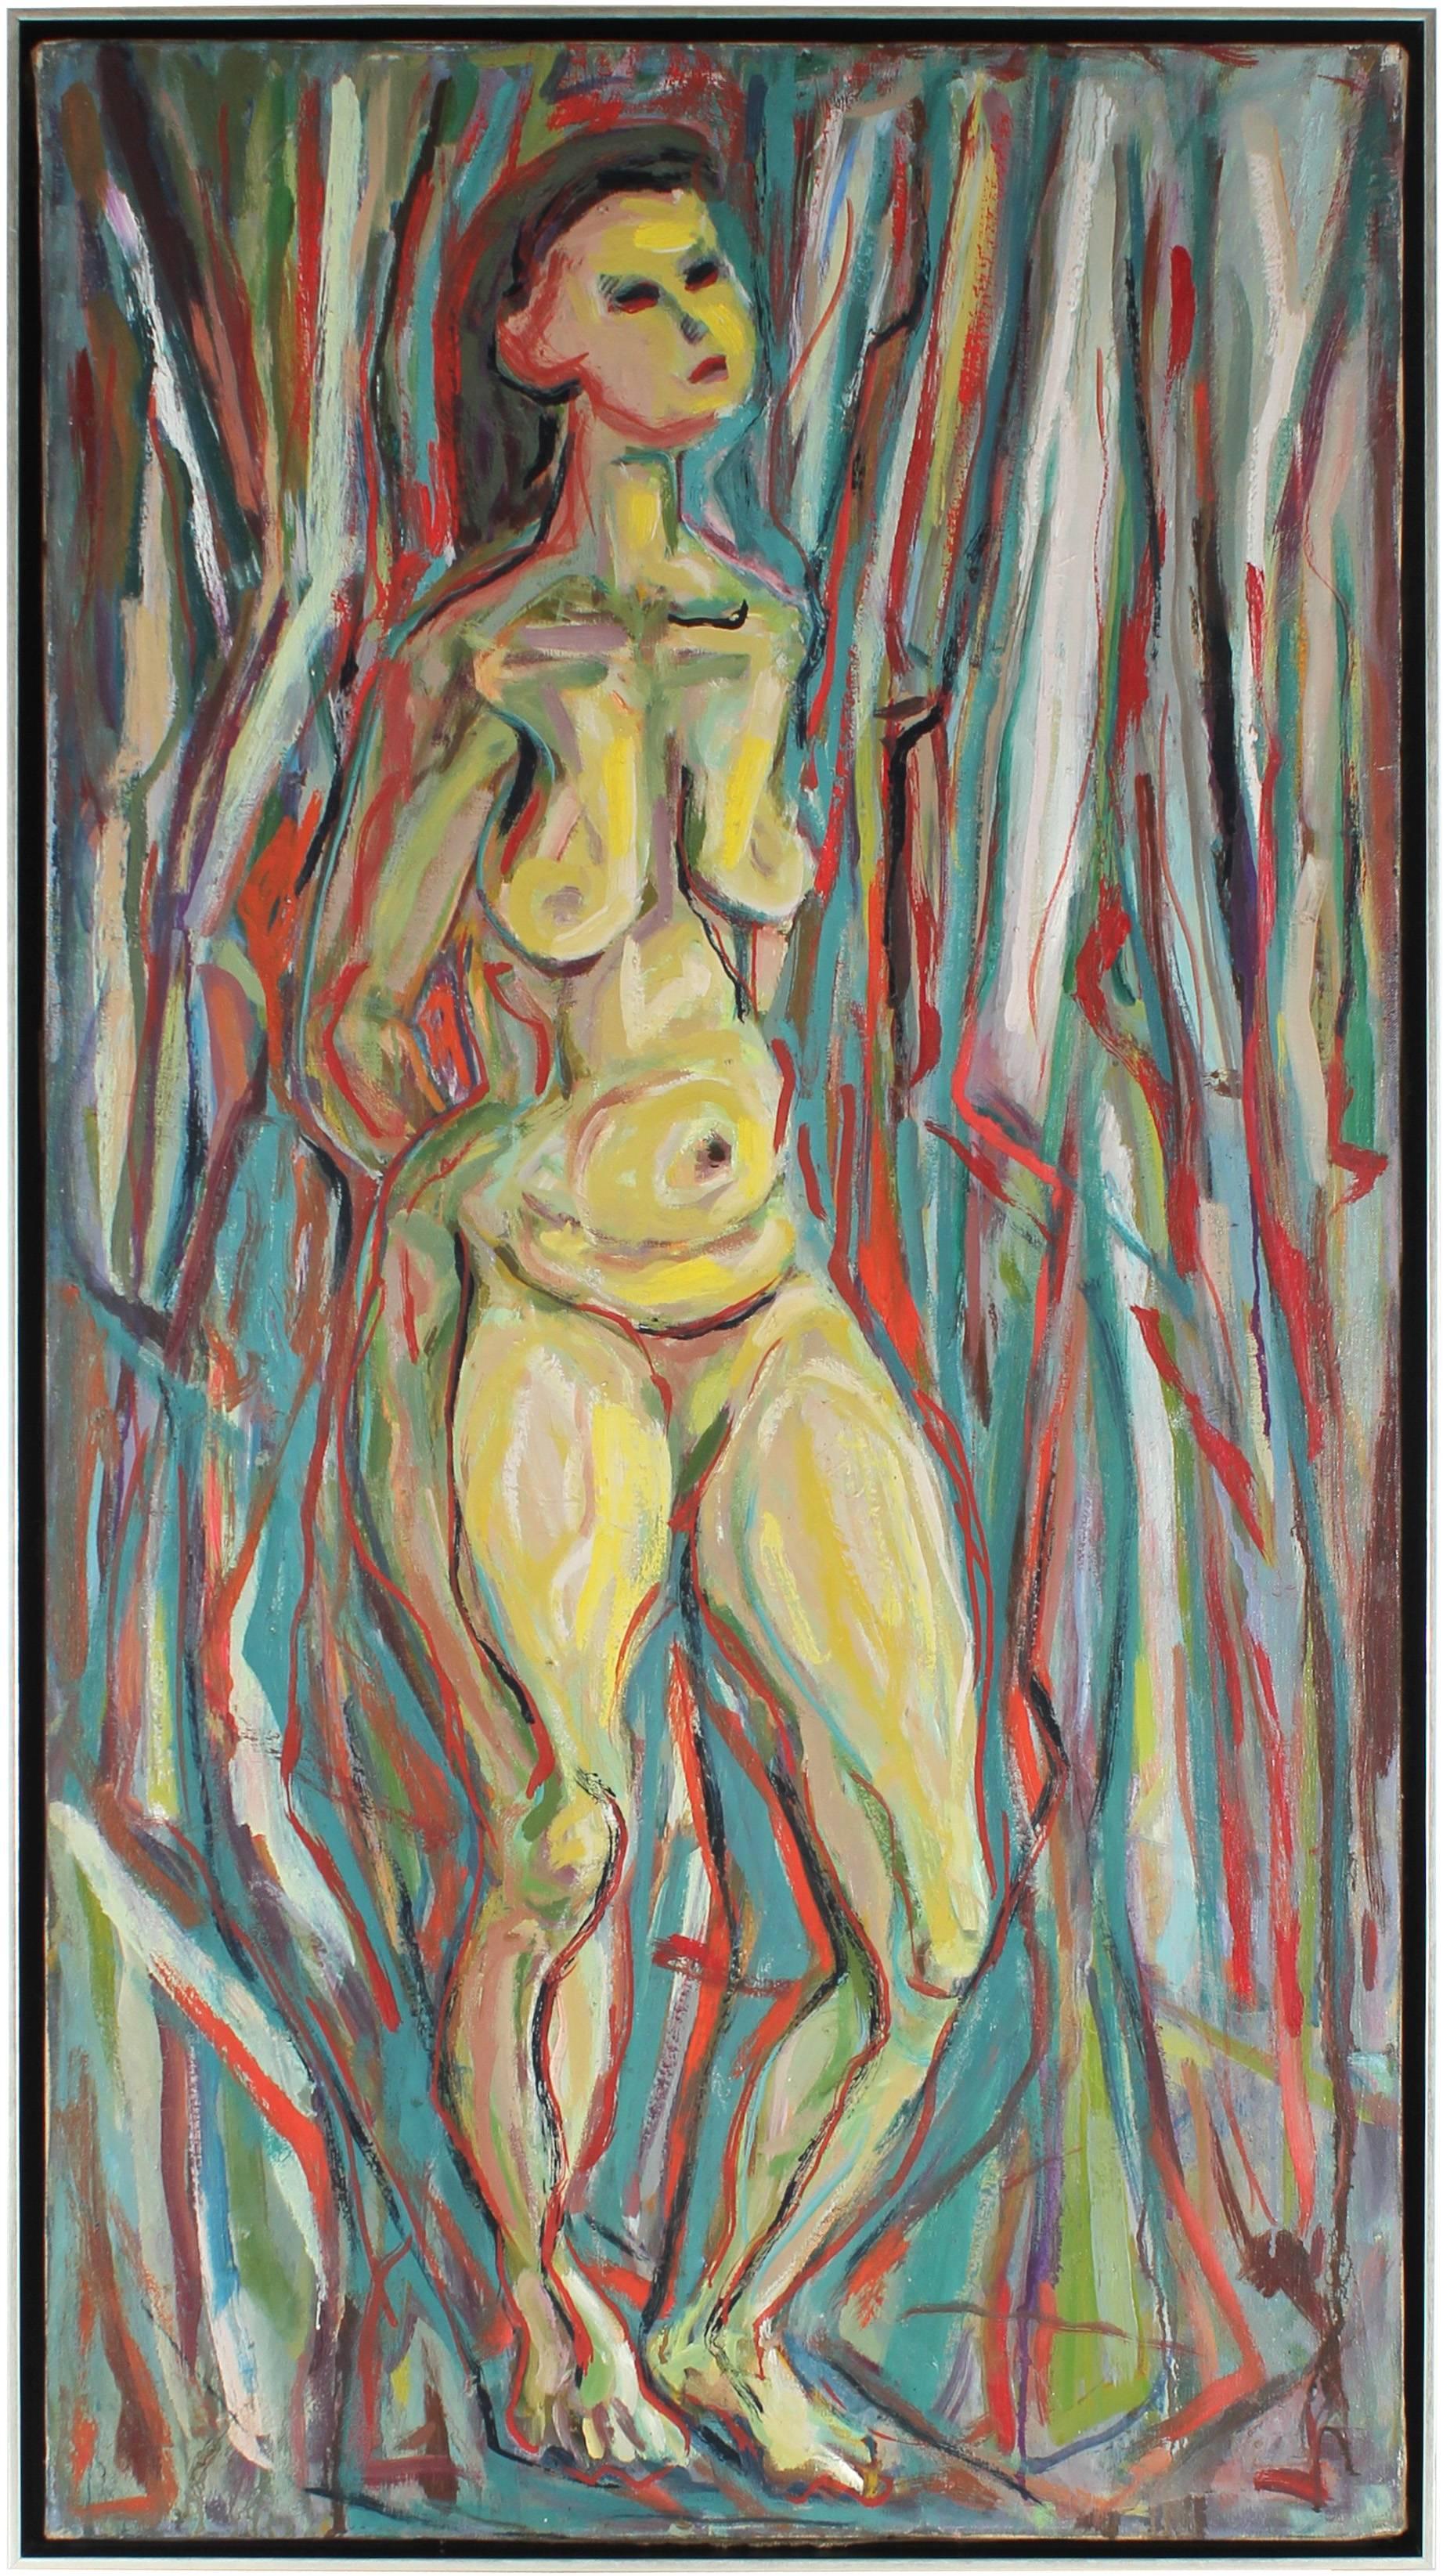 Richard Van Wingerden Nude Painting - Colorful Mid Century Expressionist Figure